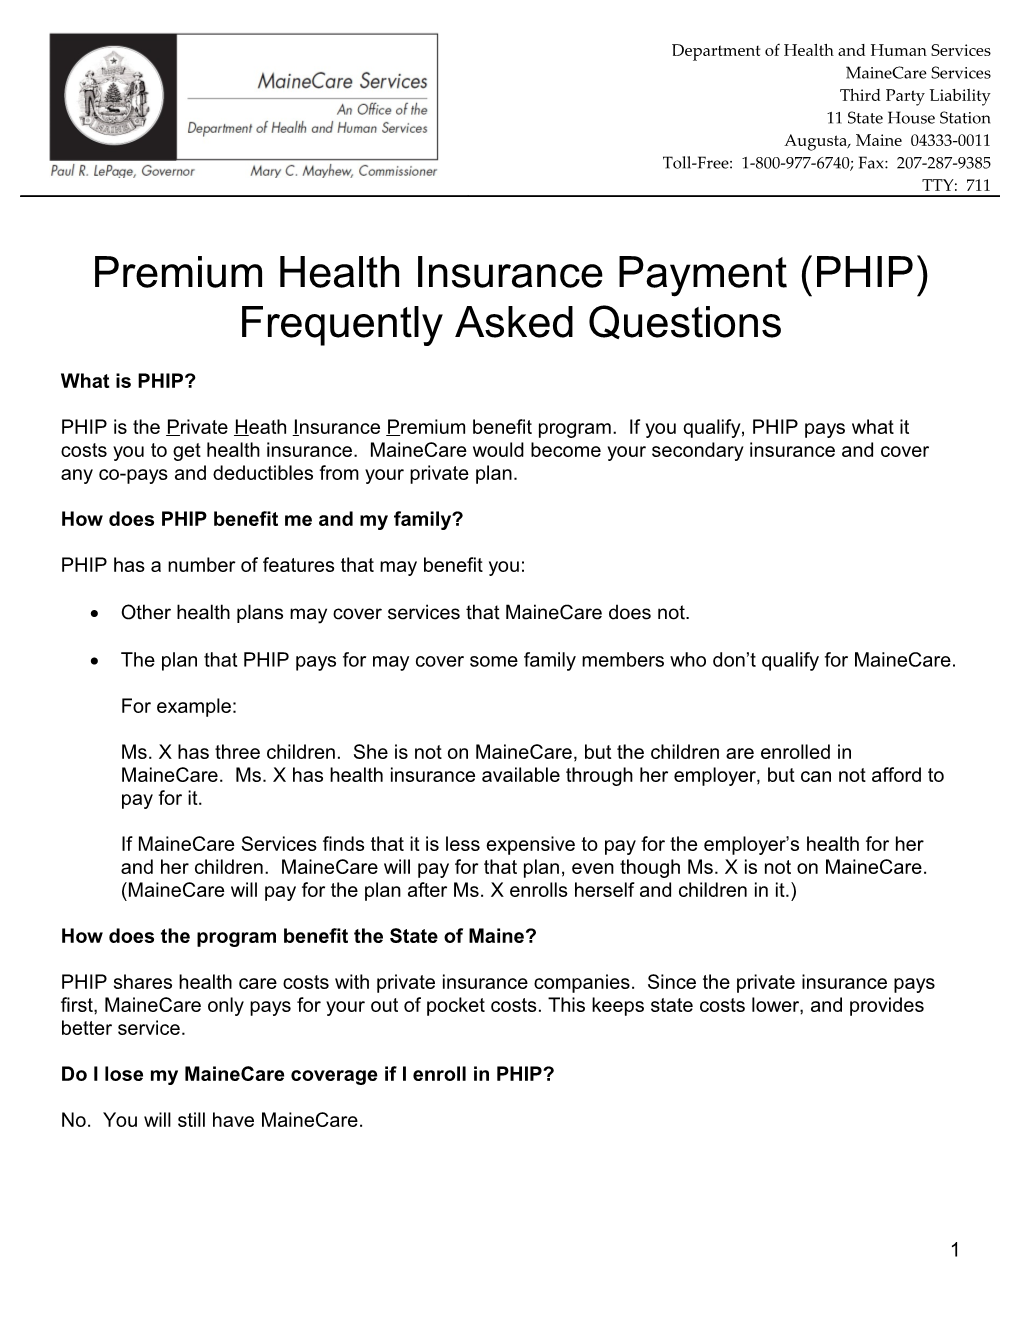 Premium Health Insurance Payment